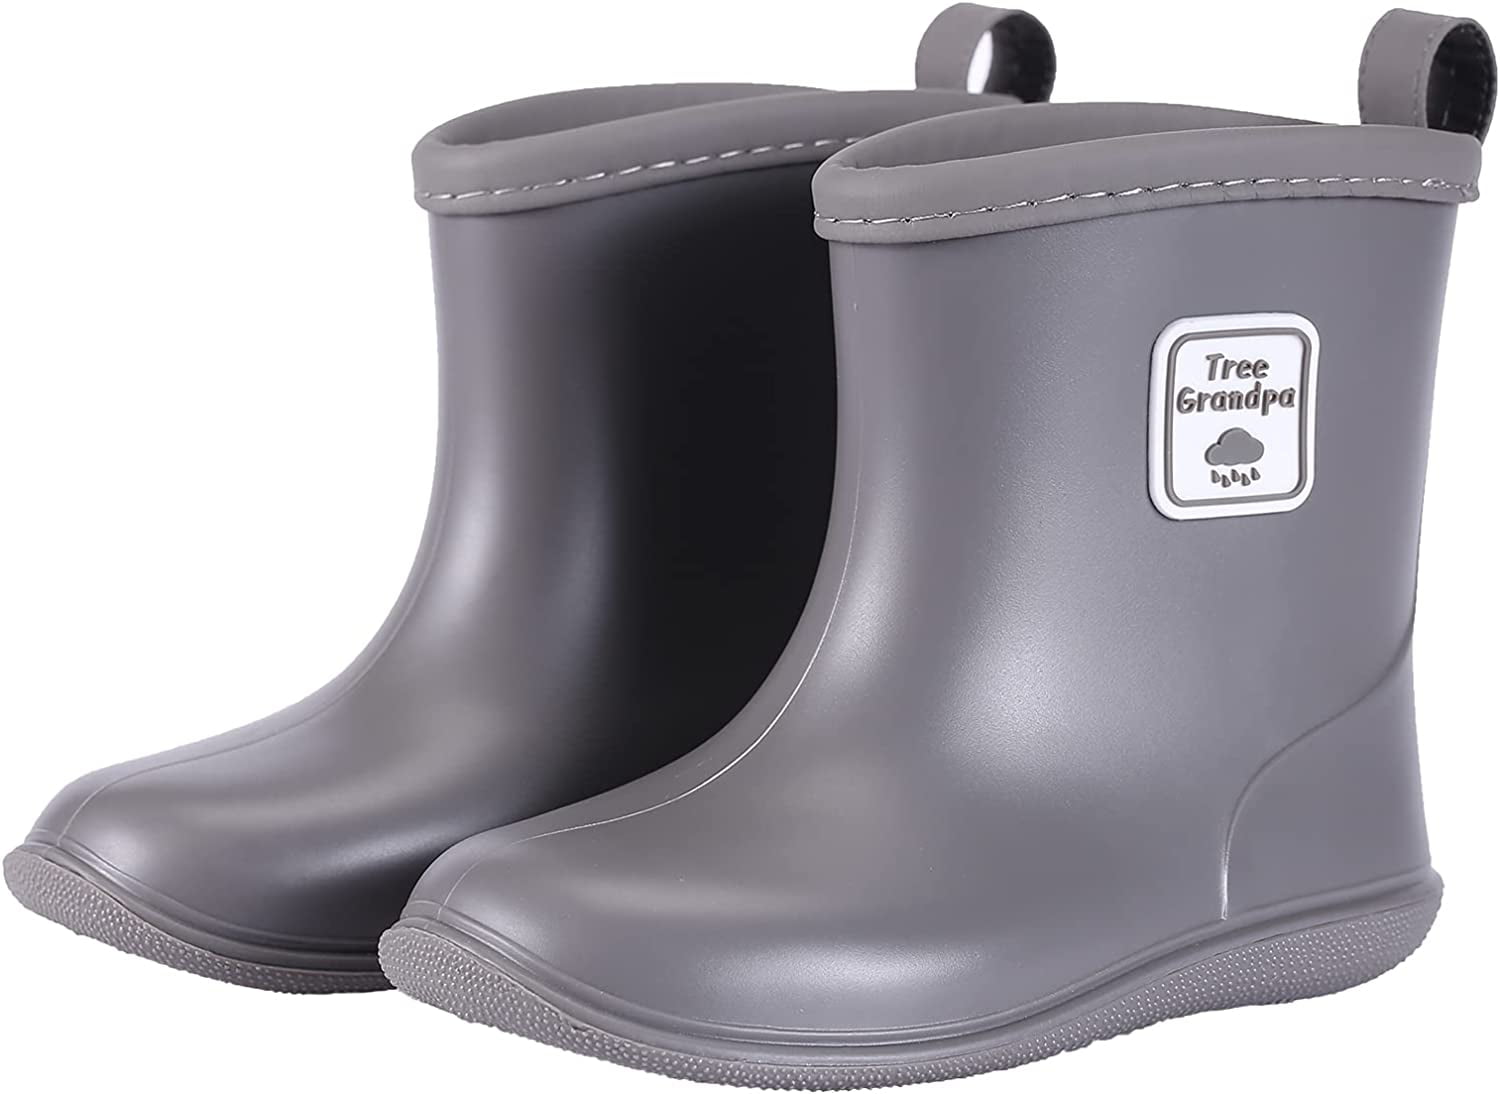 stenografi kan ikke se Metafor QWZNDZGR Toddler Rain Boots for Boys Girls Kids Rain Shoes,Lightweight and  Waterproof Baby rain boots with Easy on - Walmart.com